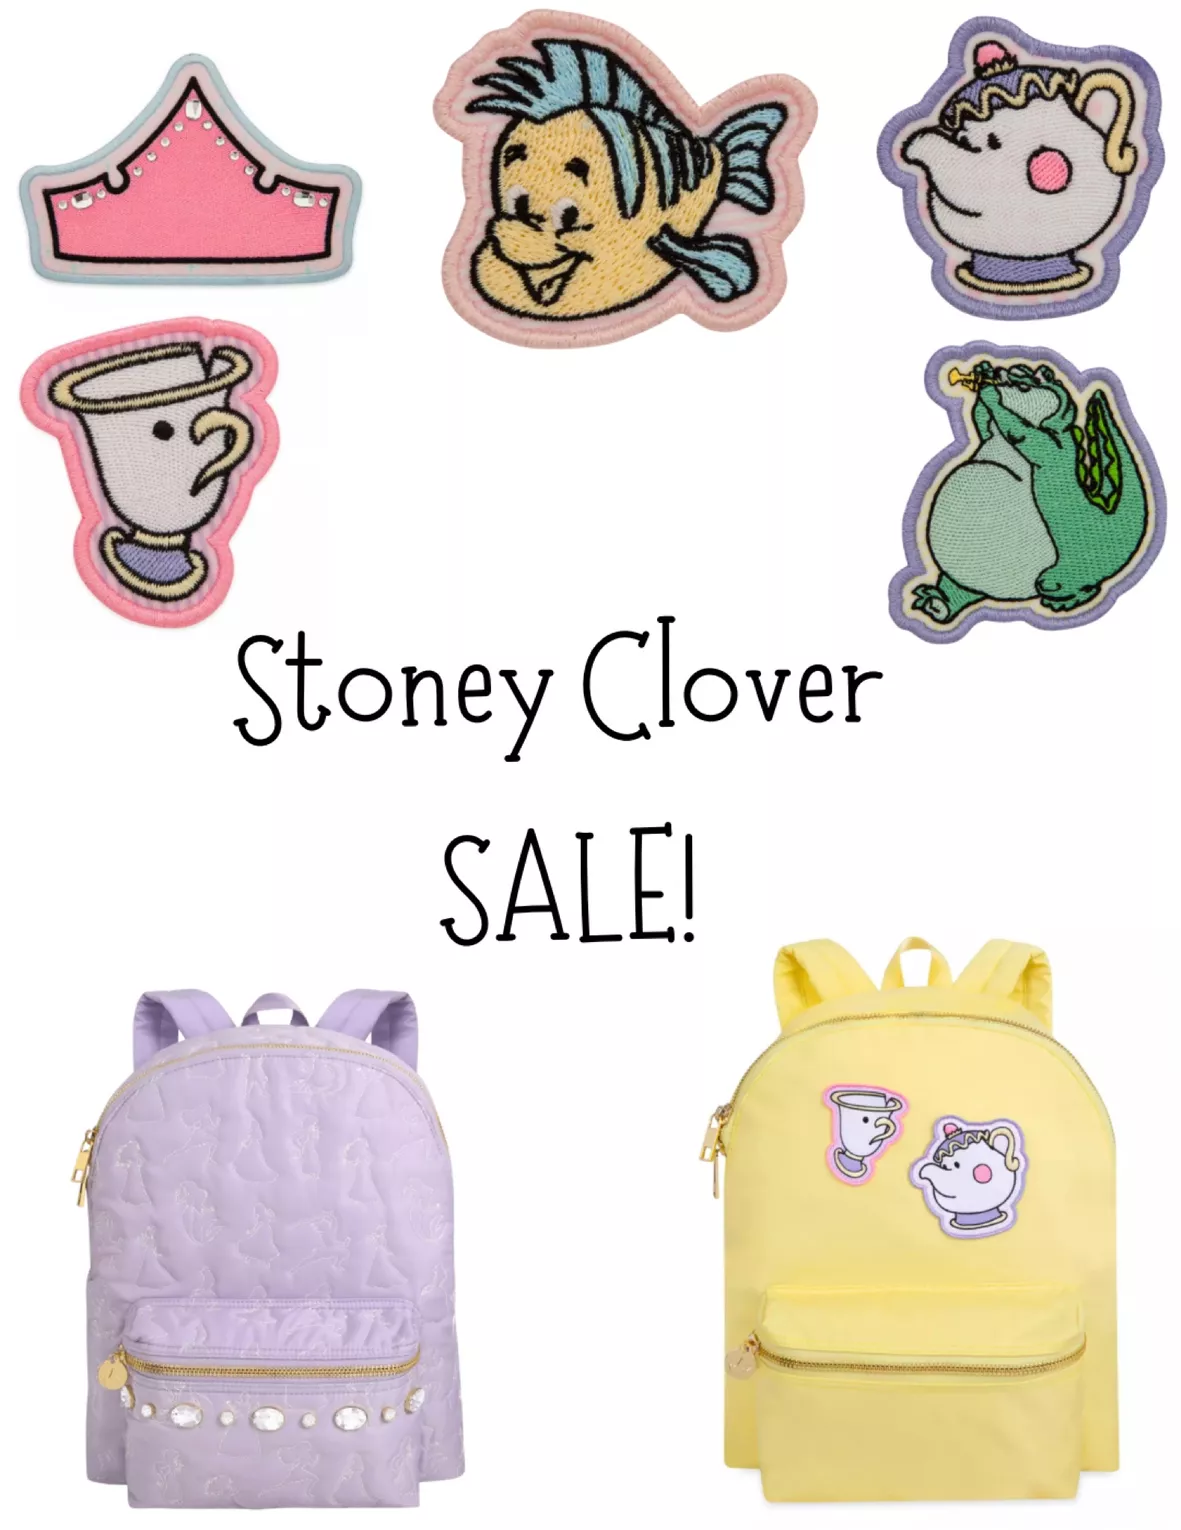 New Disney Princesses Stoney Clover Lane Collection at Disneyland